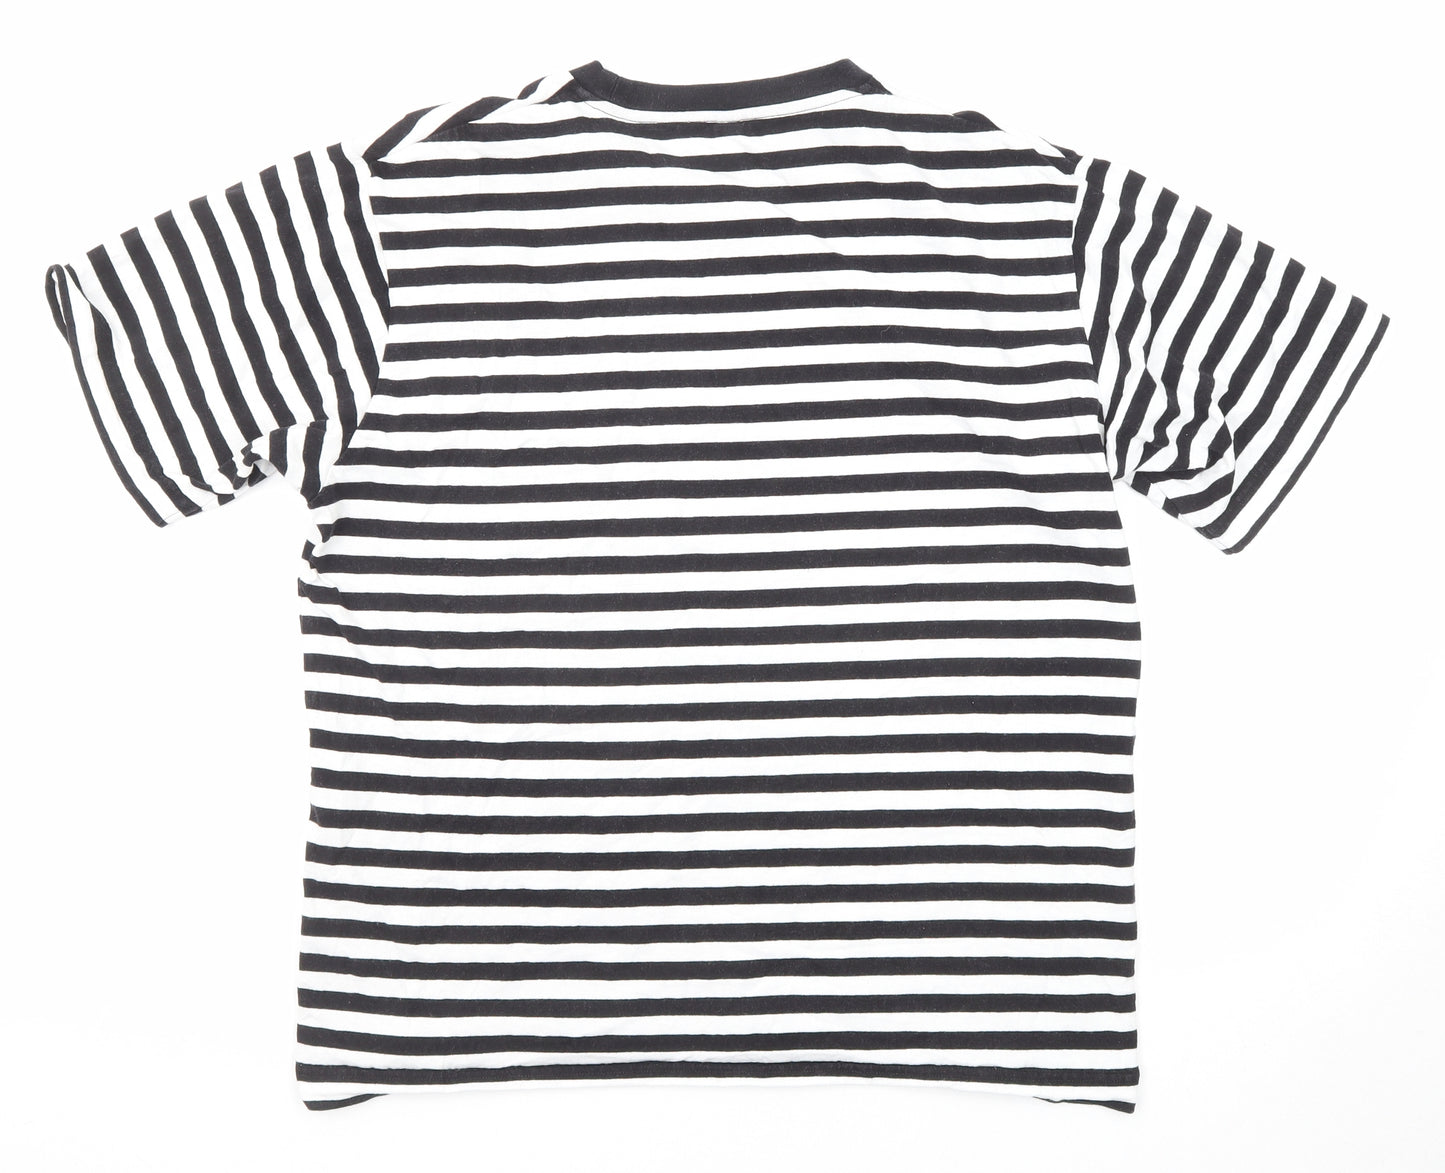 Uniqlo Mens Black Striped Cotton T-Shirt Size M Round Neck